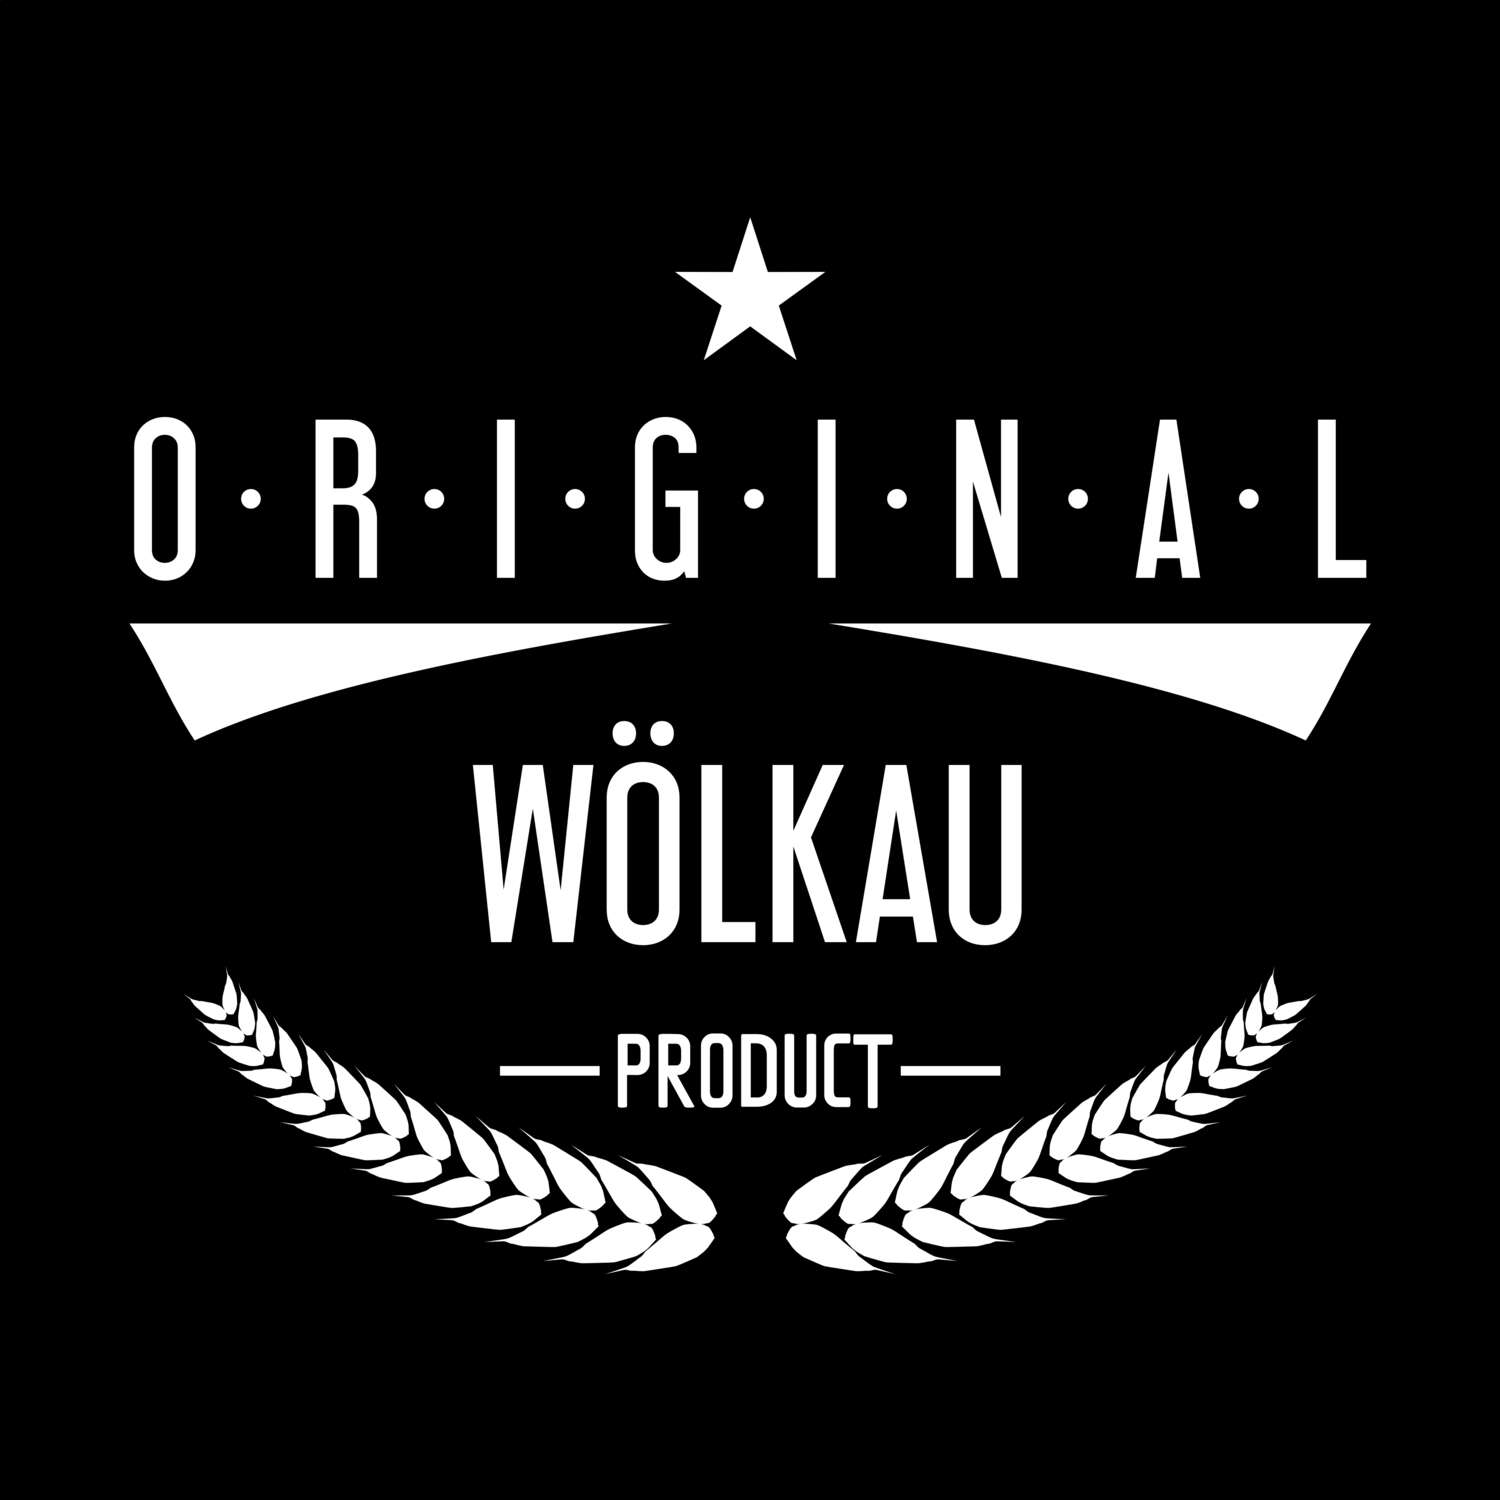 Wölkau T-Shirt »Original Product«